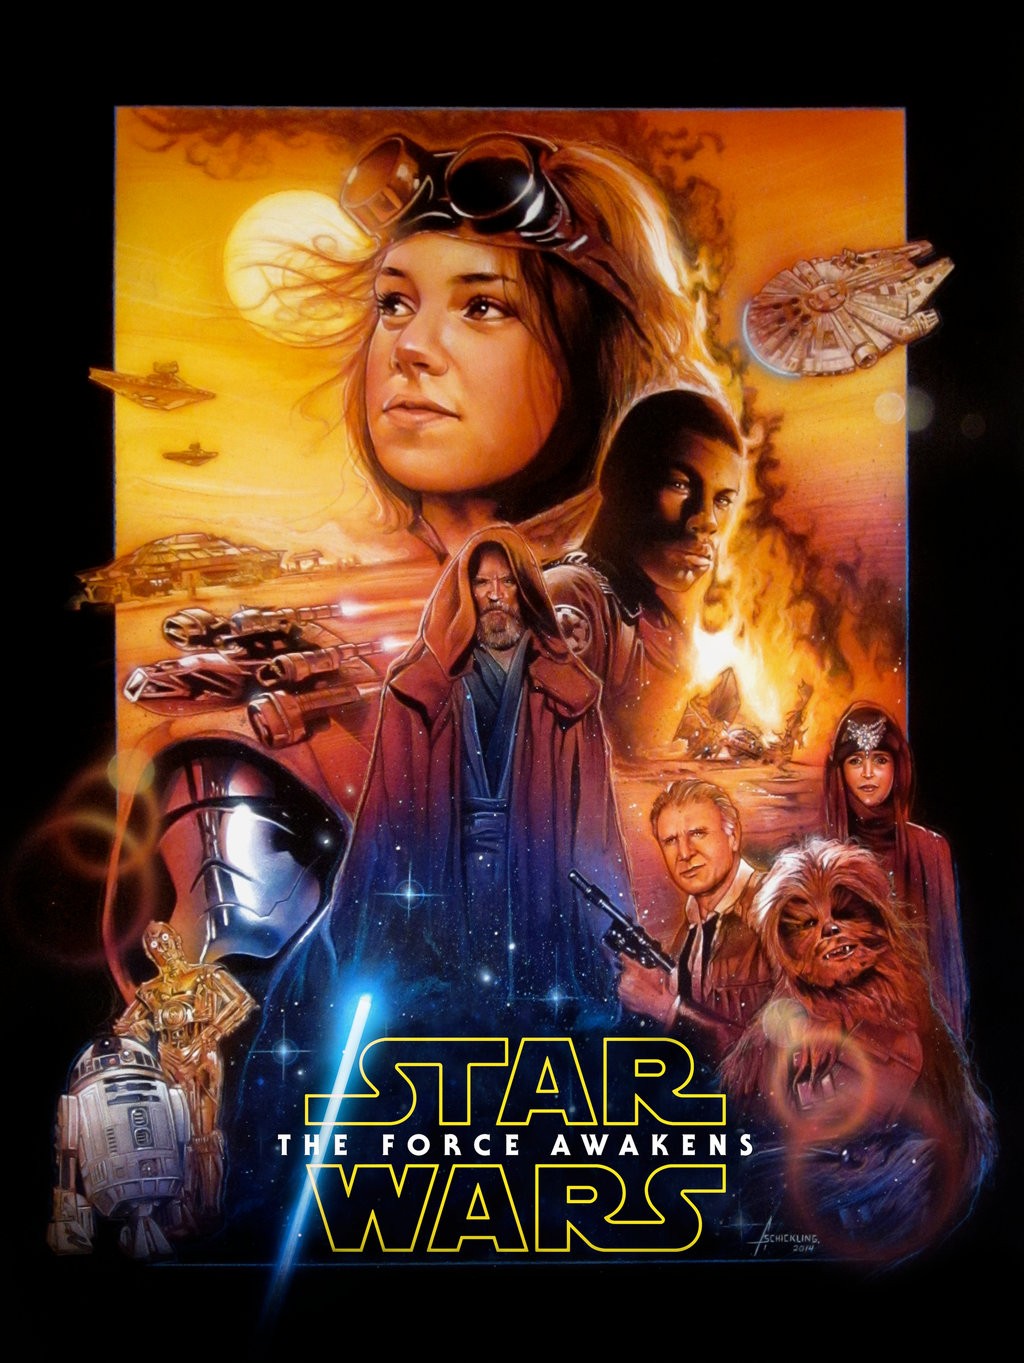 General 1024x1363 fan art artwork movies Star Wars movie poster science fiction